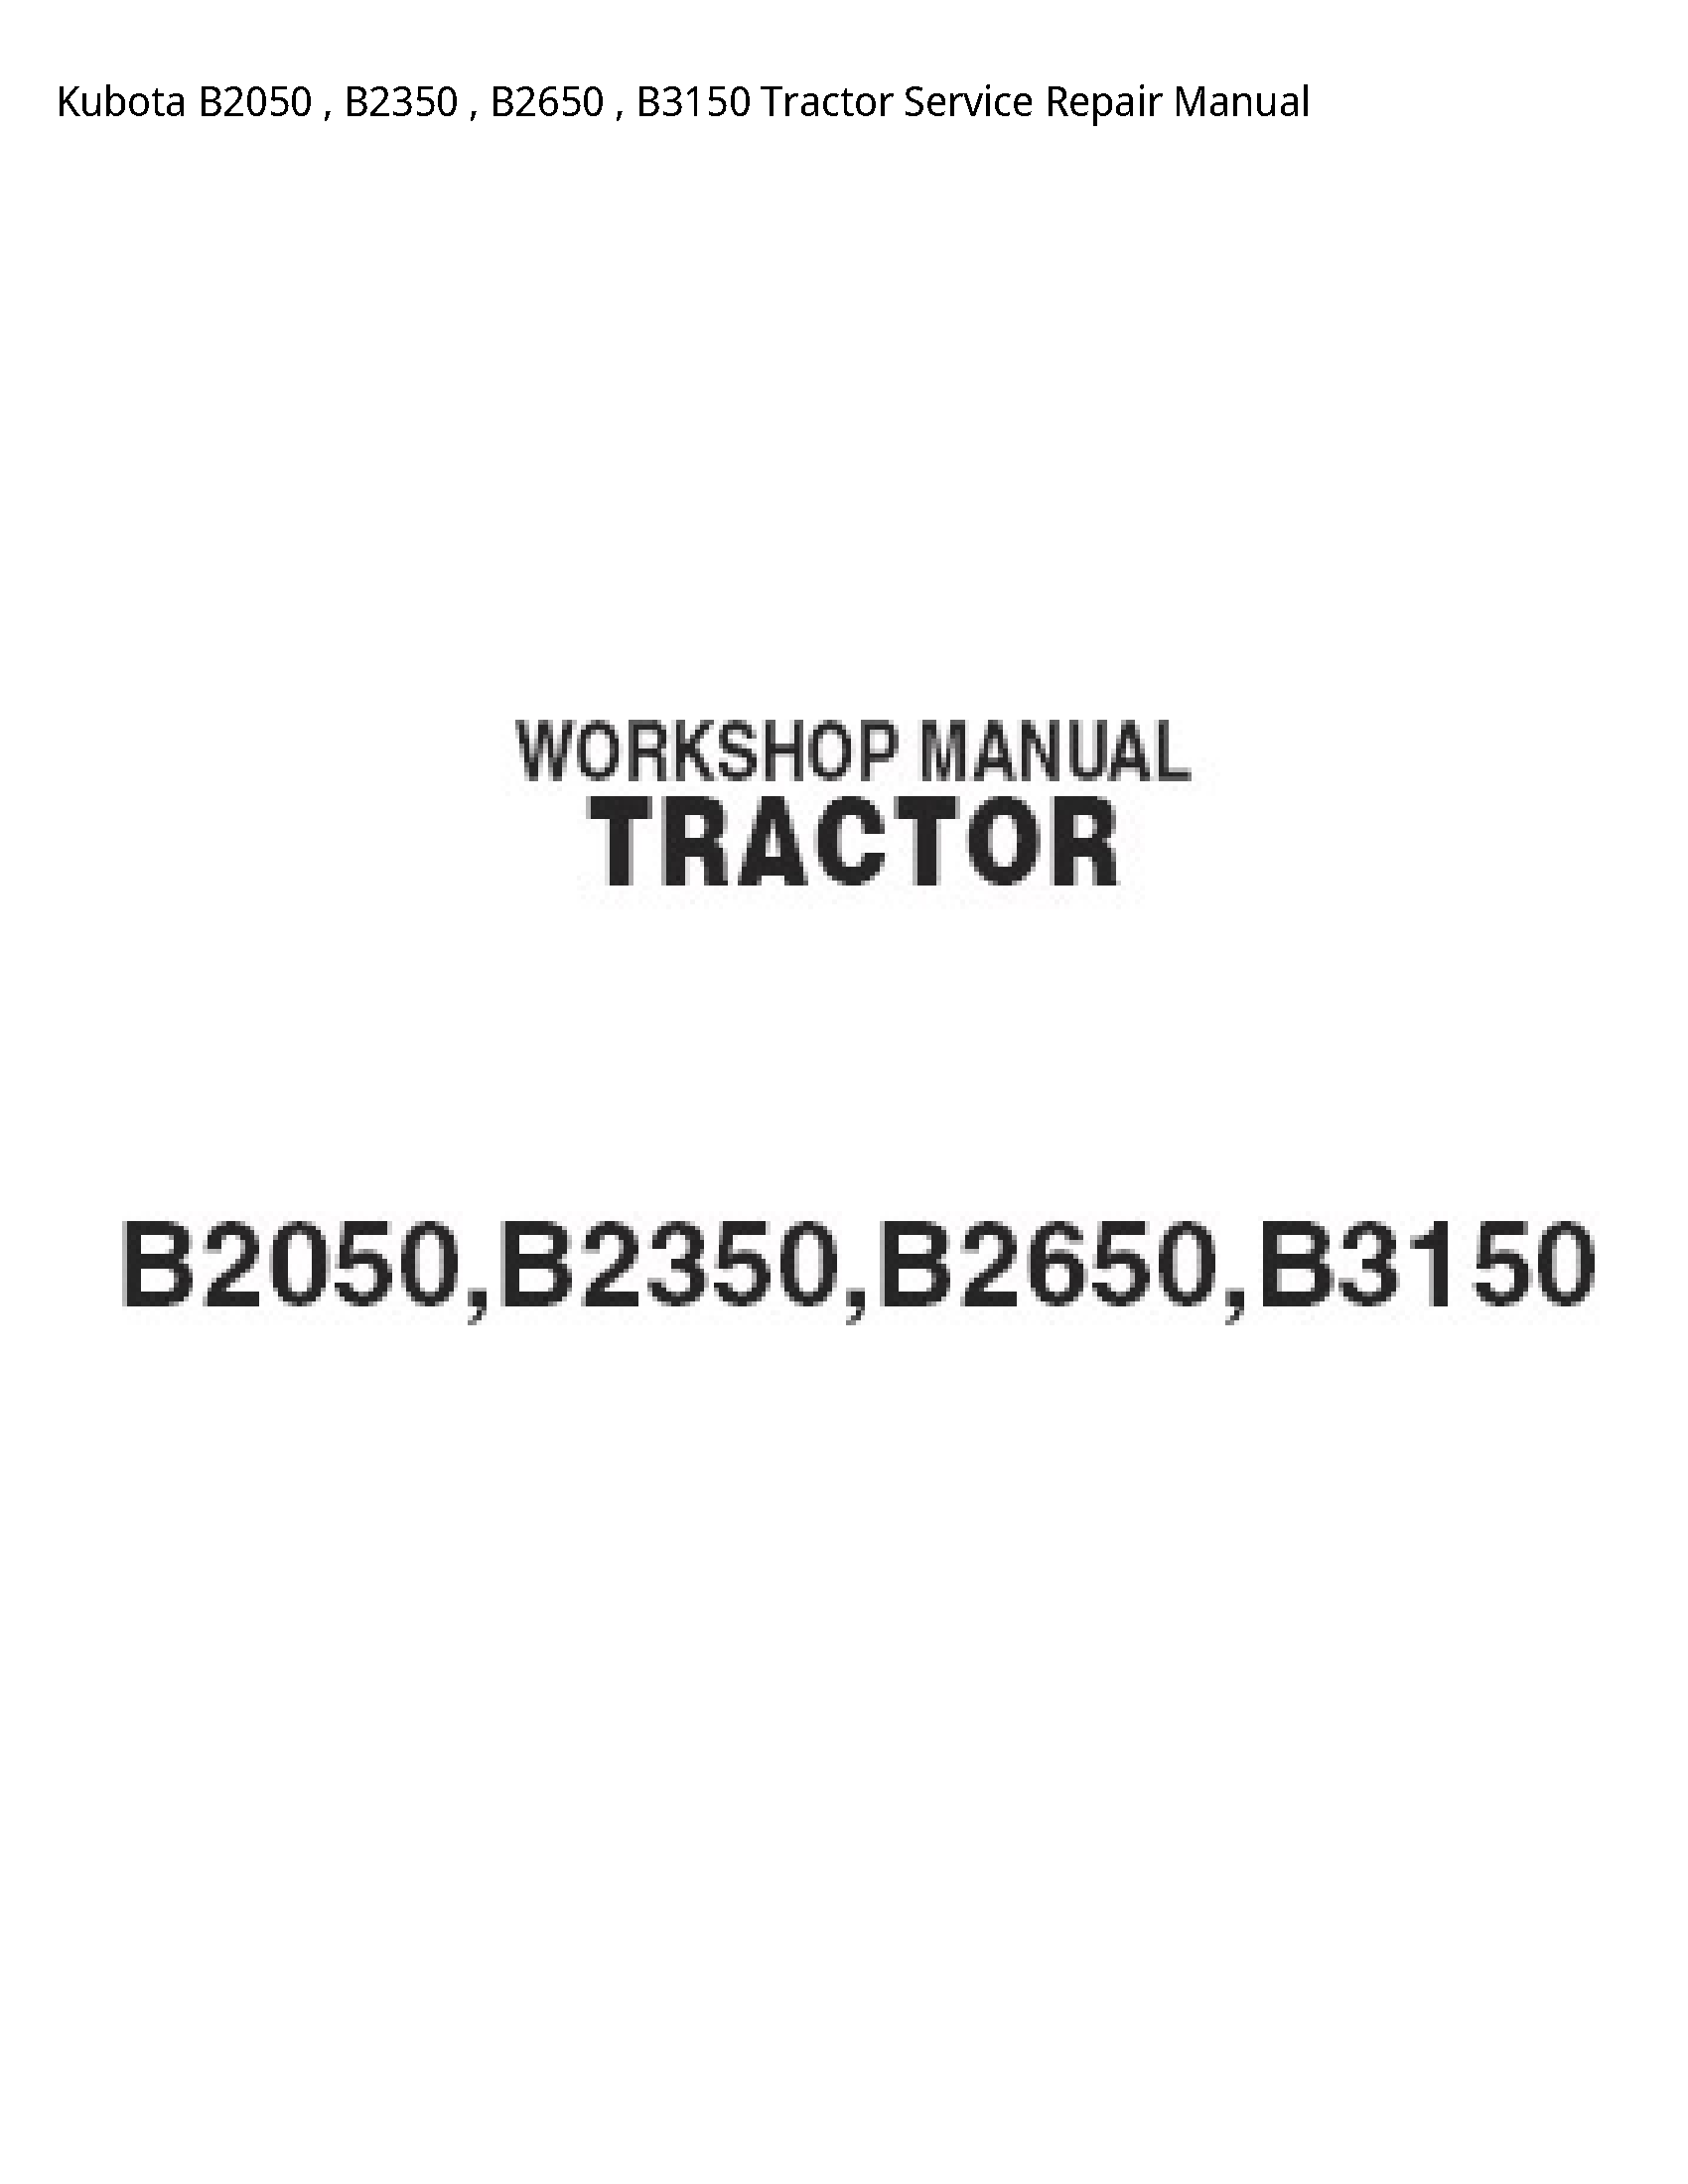 Kubota B2050 Tractor manual